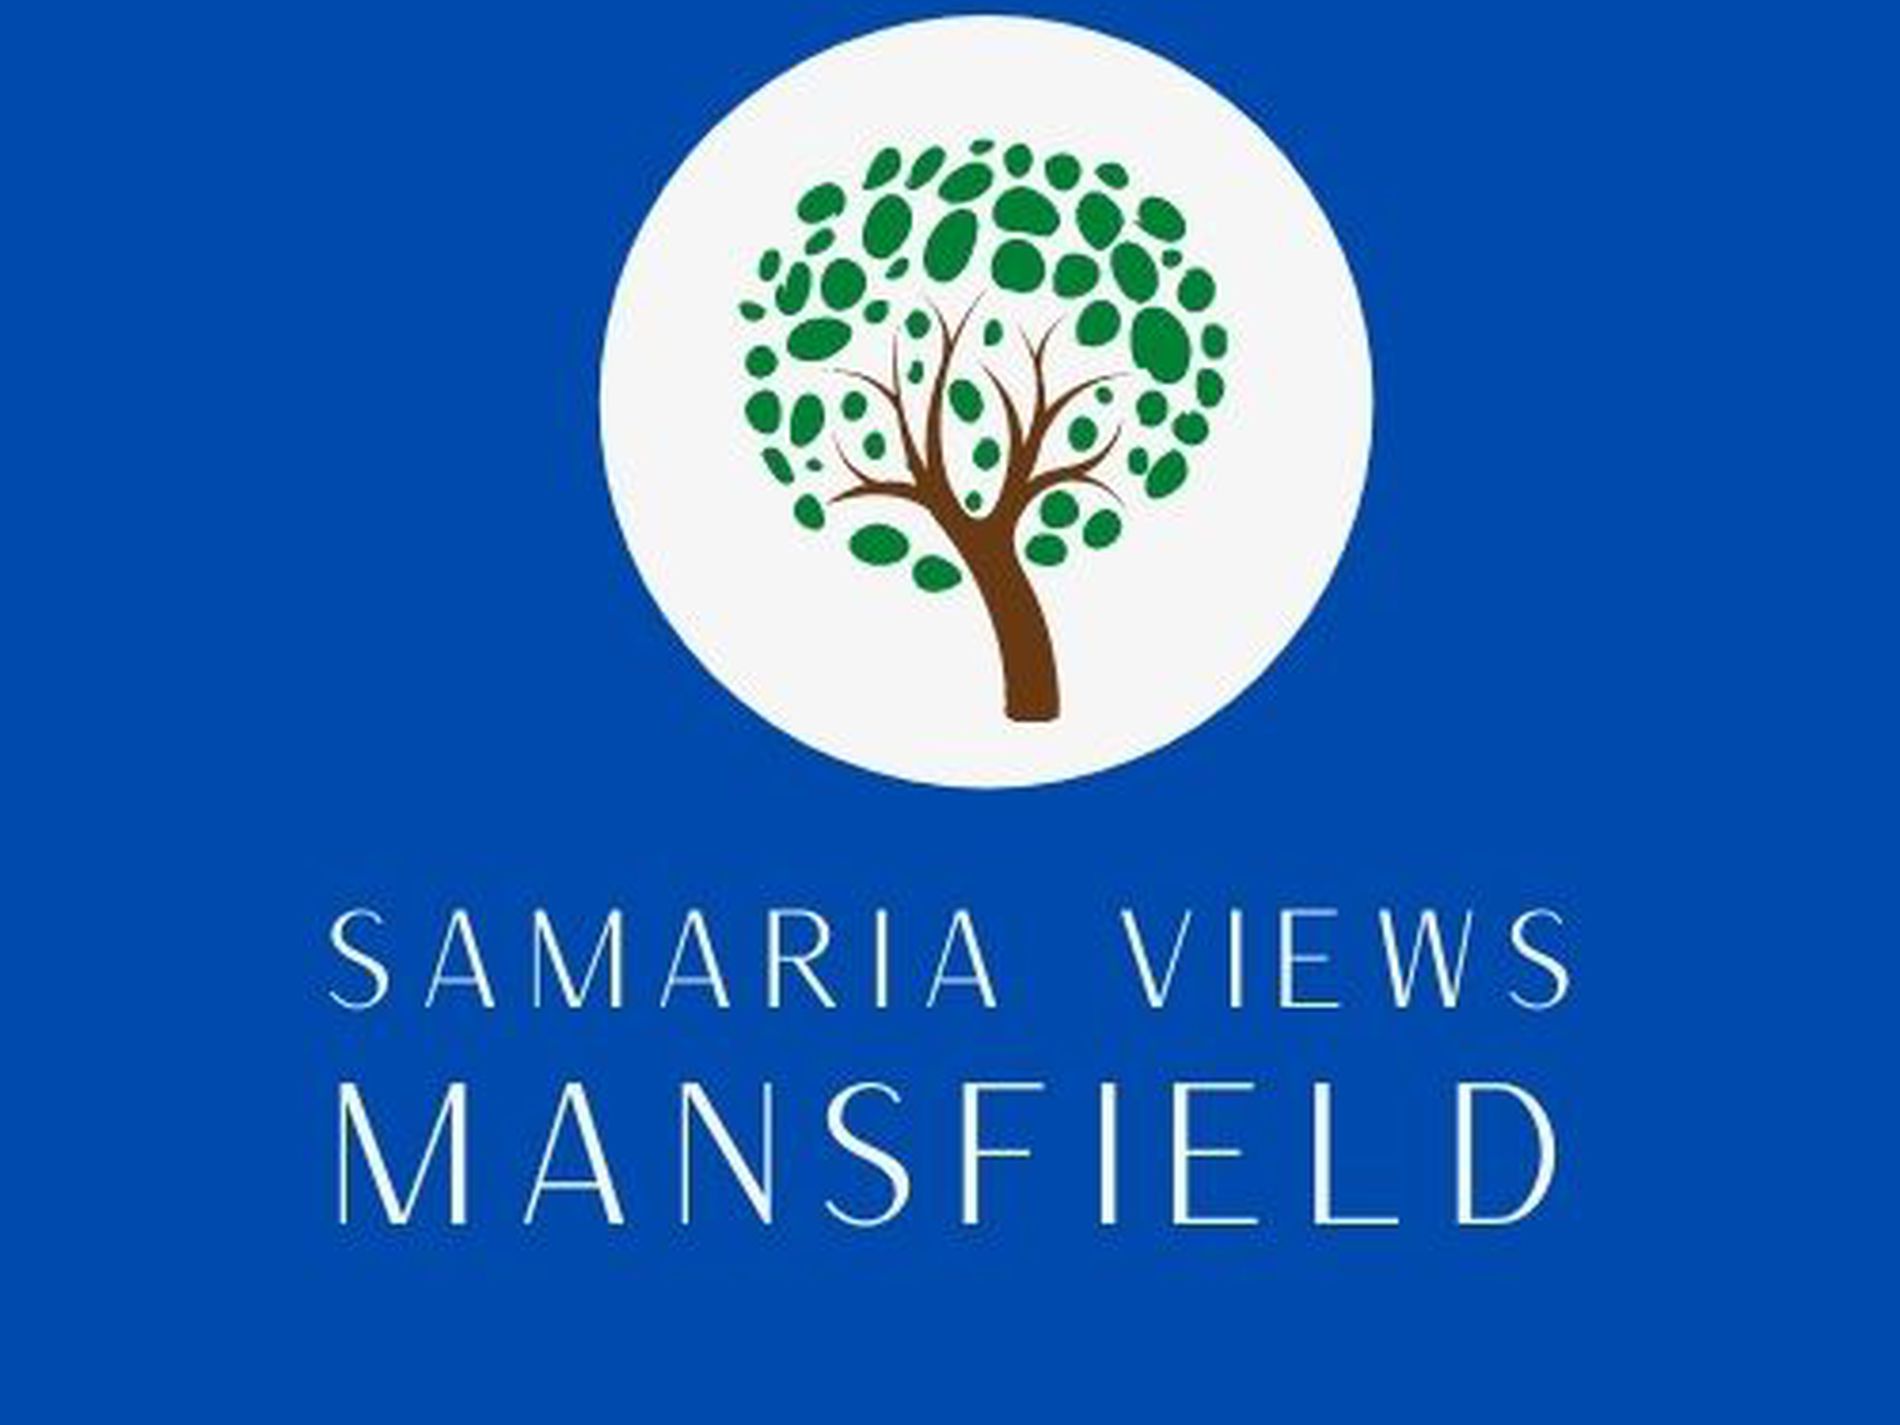 Lot 101, Samaria Views, Mansfield